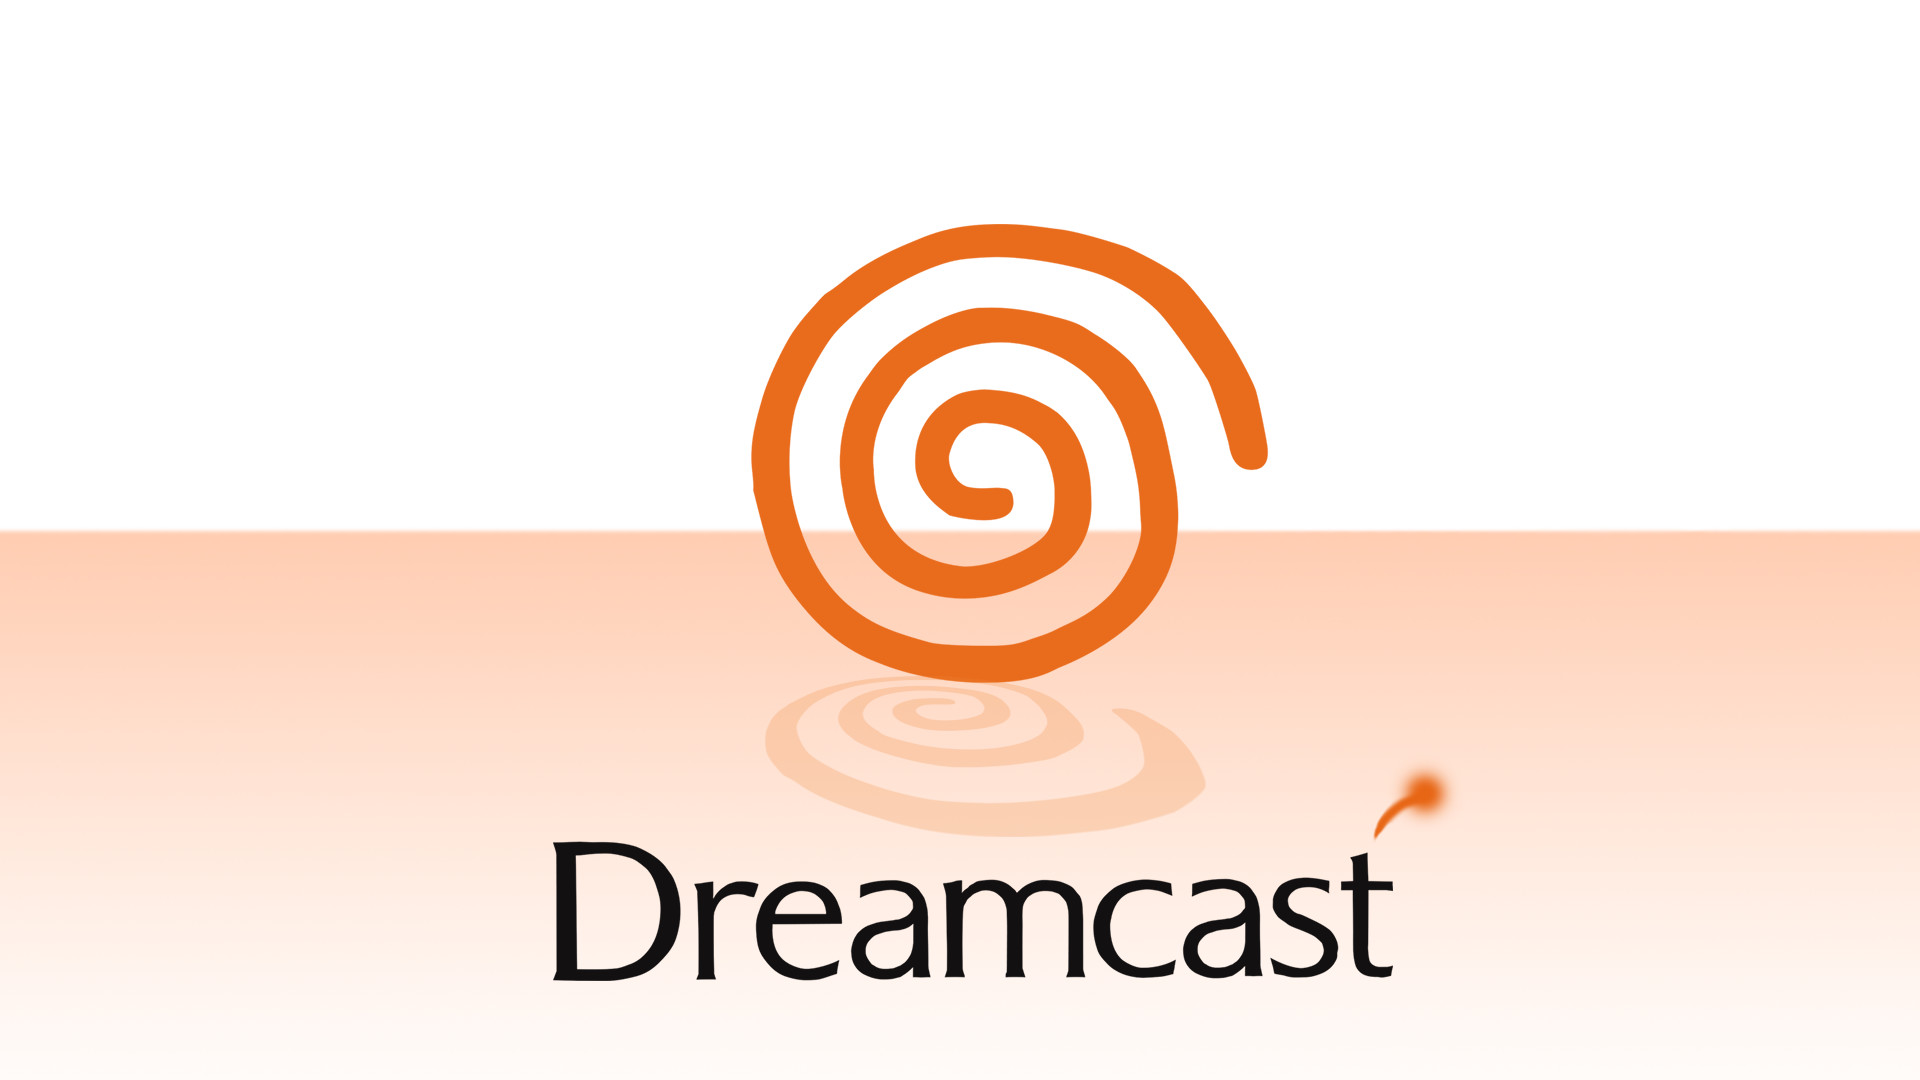 Dreamcast Wallpaper Pictures